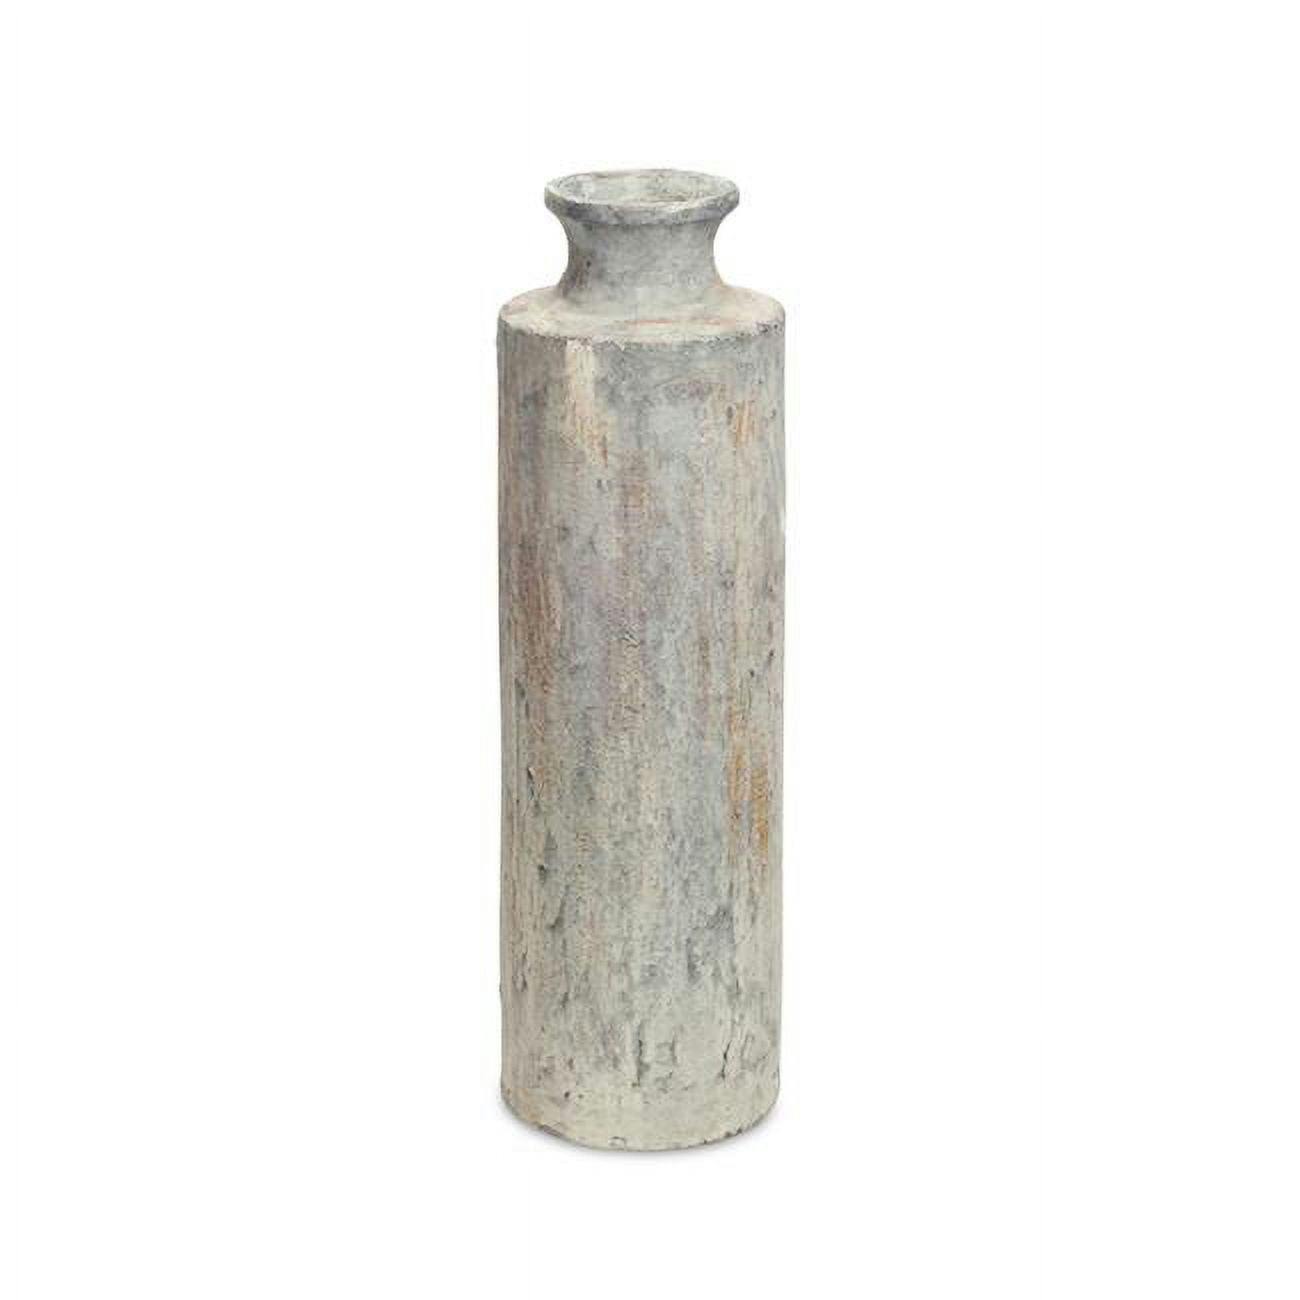 Rustic Finnick White Ceramic Floor Vase, 26" Tall